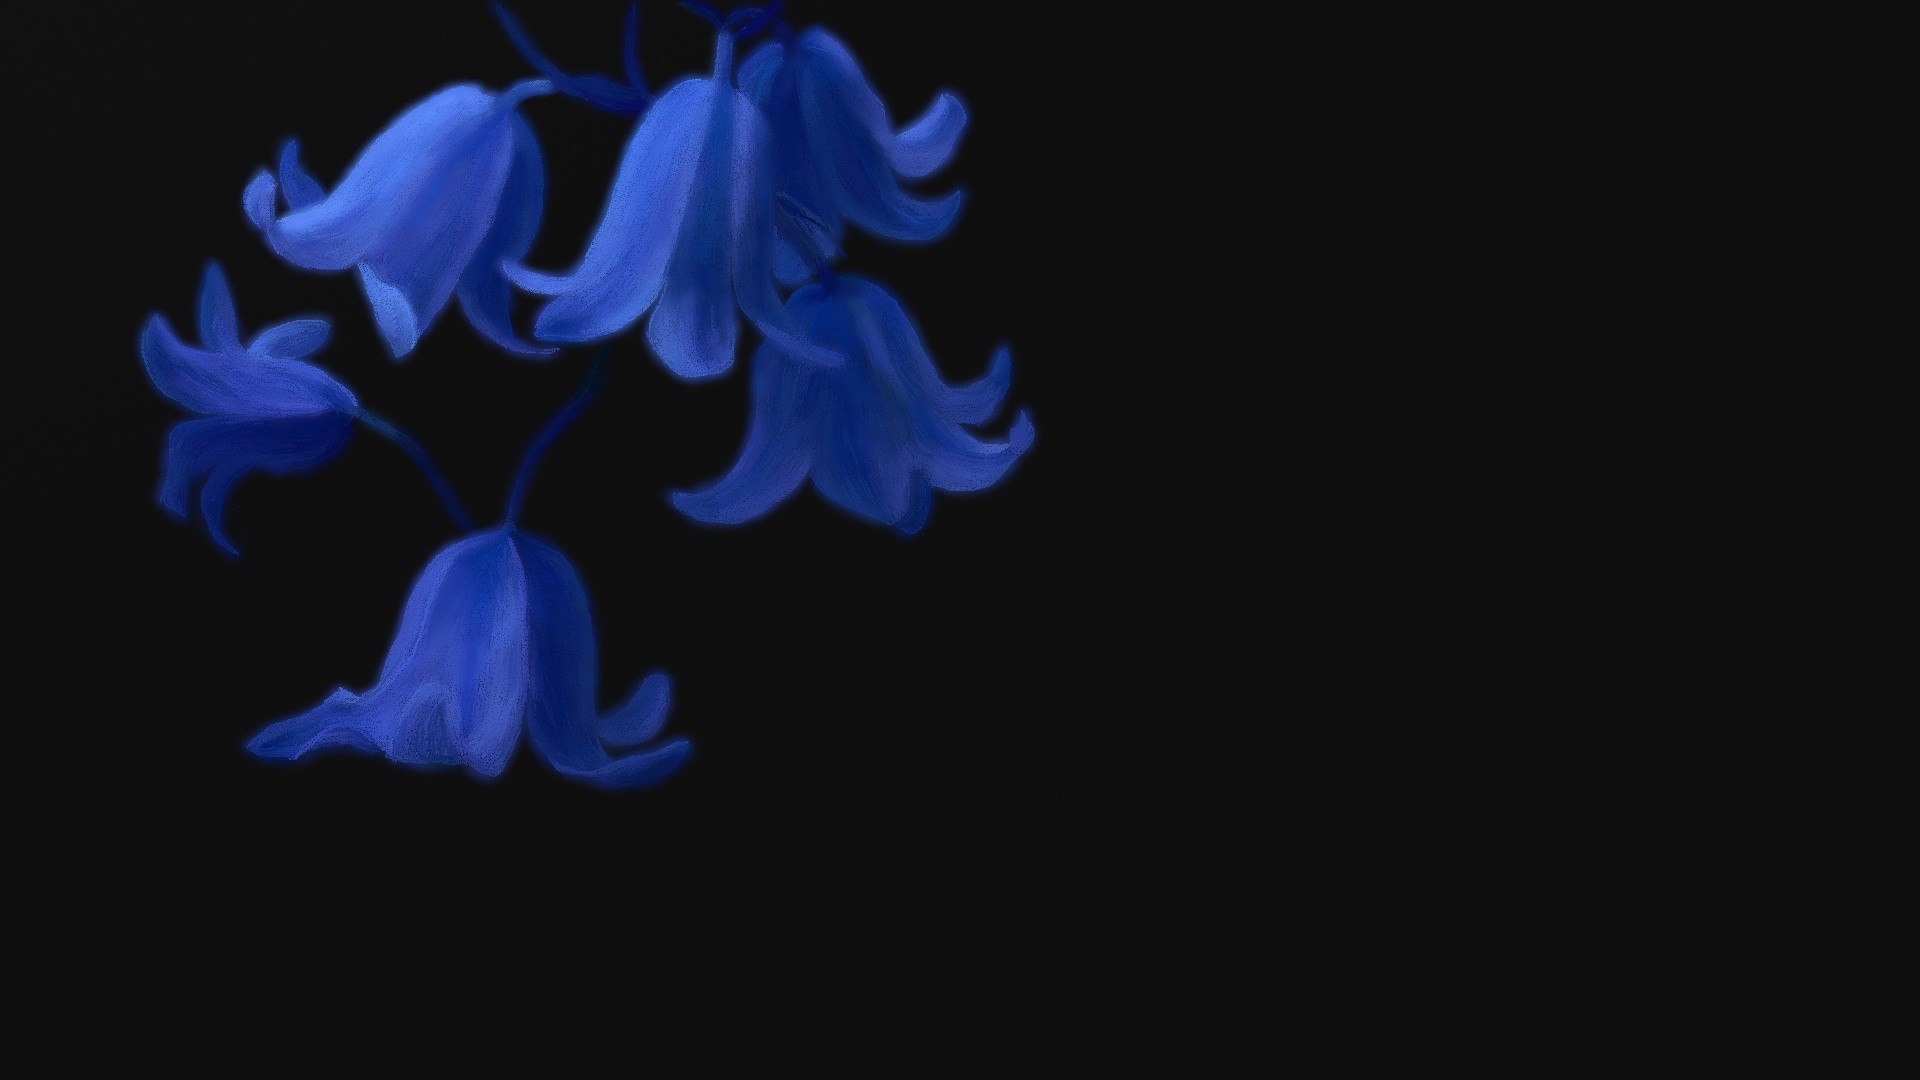 Blue Flower Black Background Wallpaper - Images Gallery